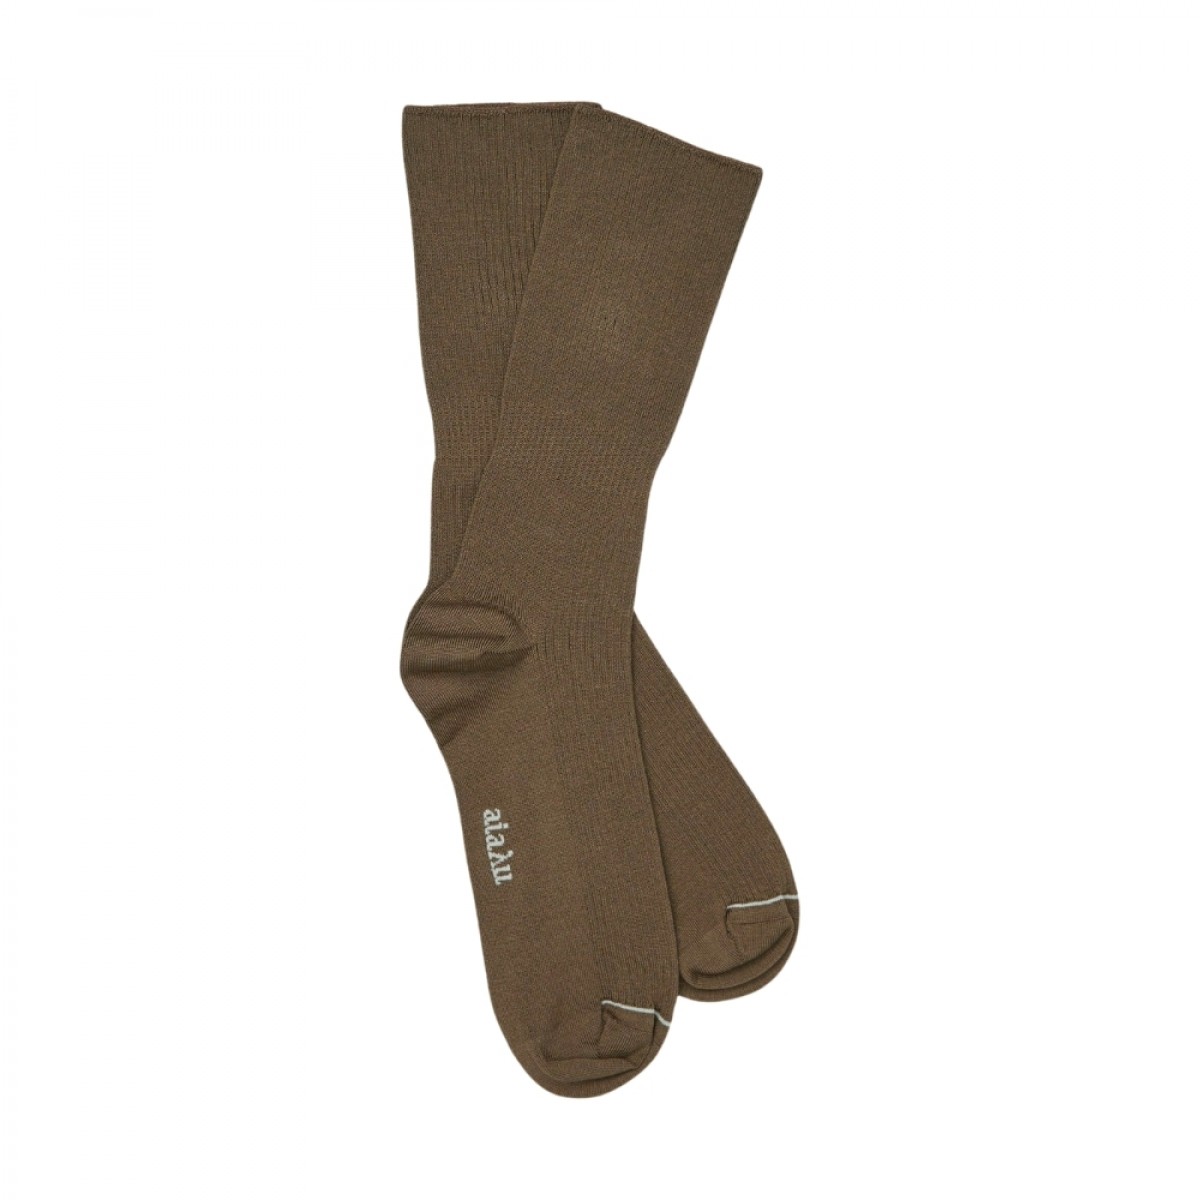 cotton rib socks - chestnut - front